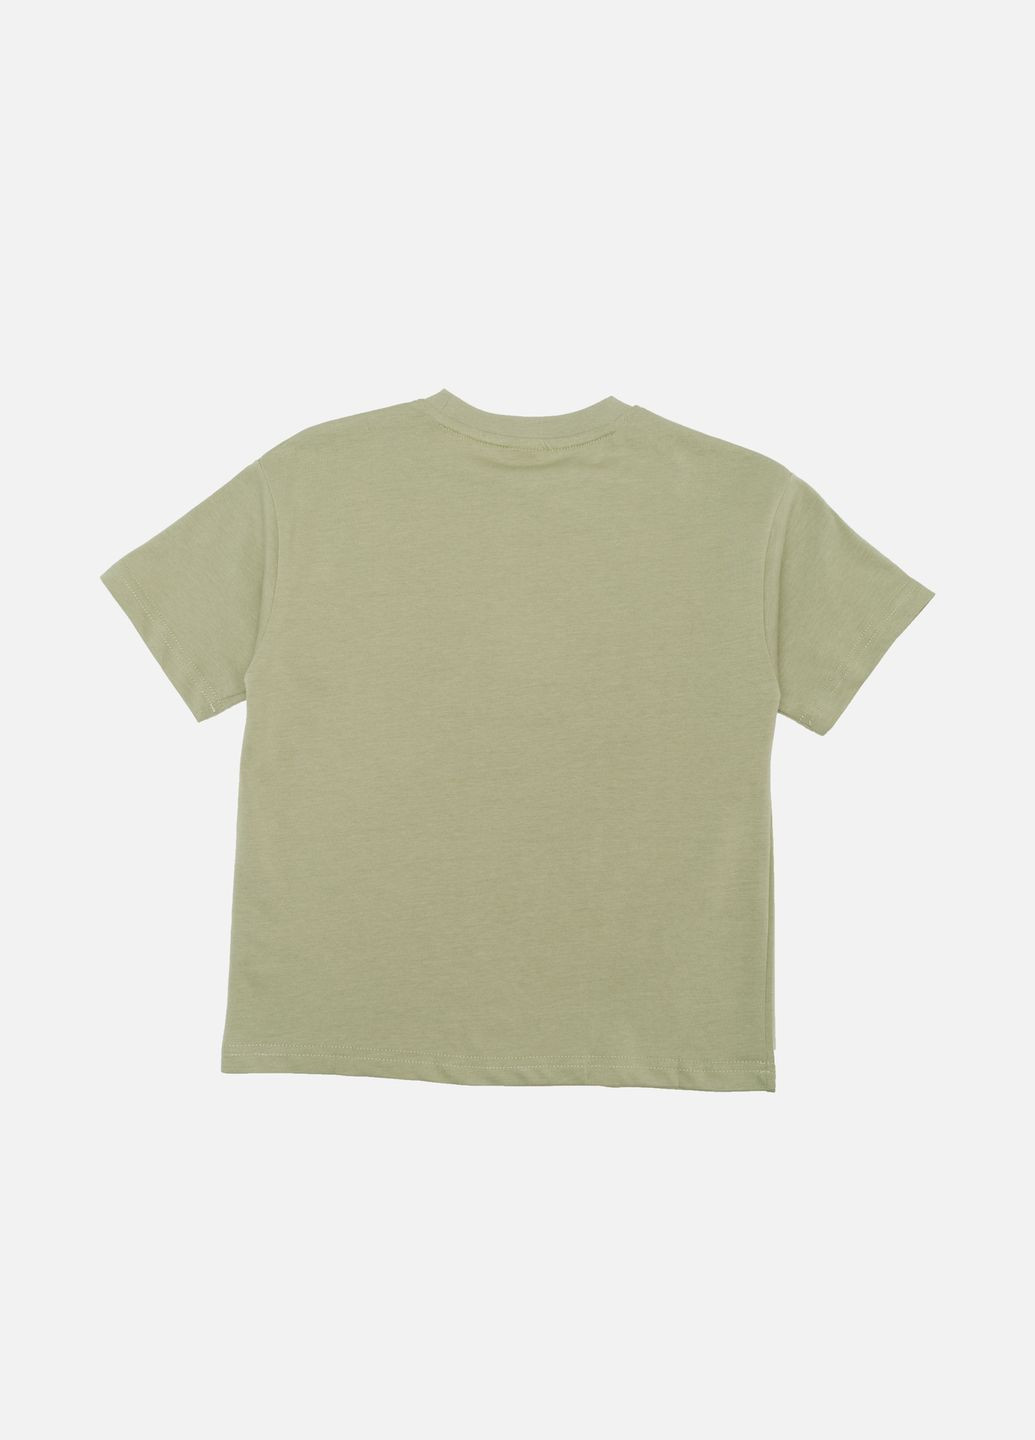 Оливковая летняя футболка с коротким рукавом для мальчика цвет оливковый цб-00243552 Lizi Kids